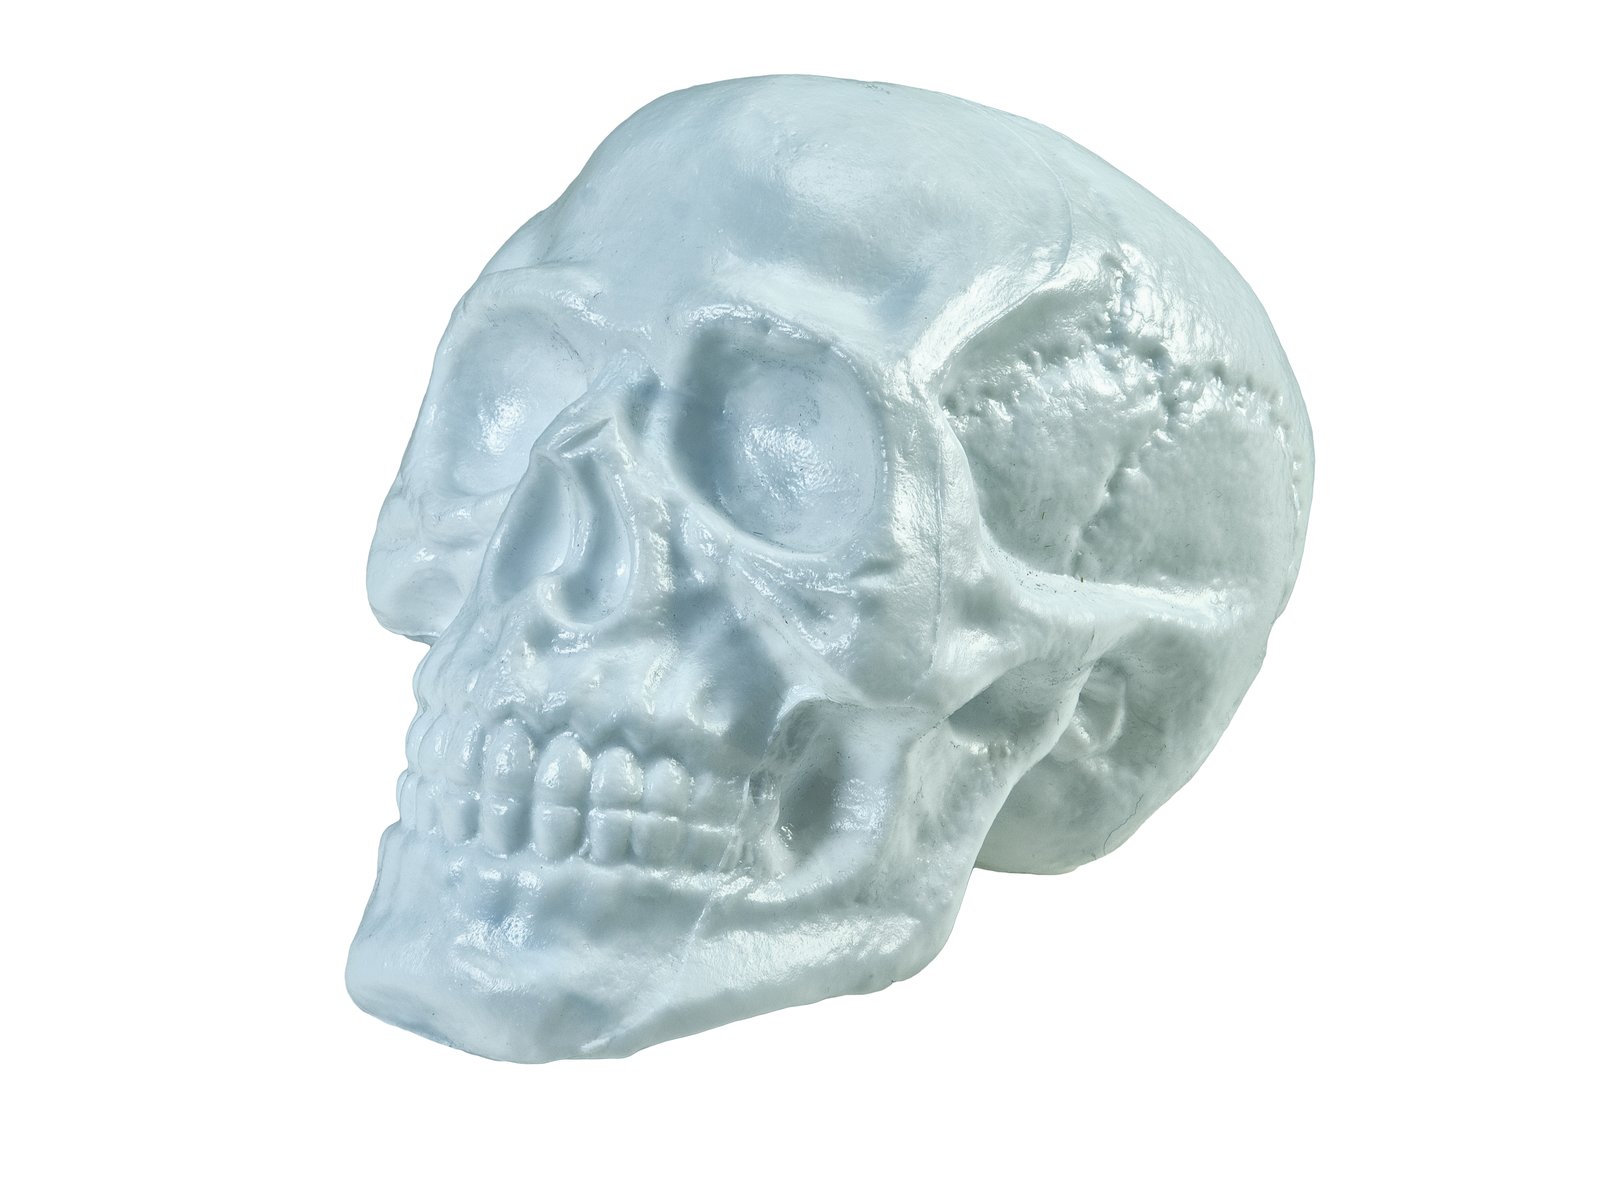 EUROPALMS Halloween Skull, 31x22x22cm